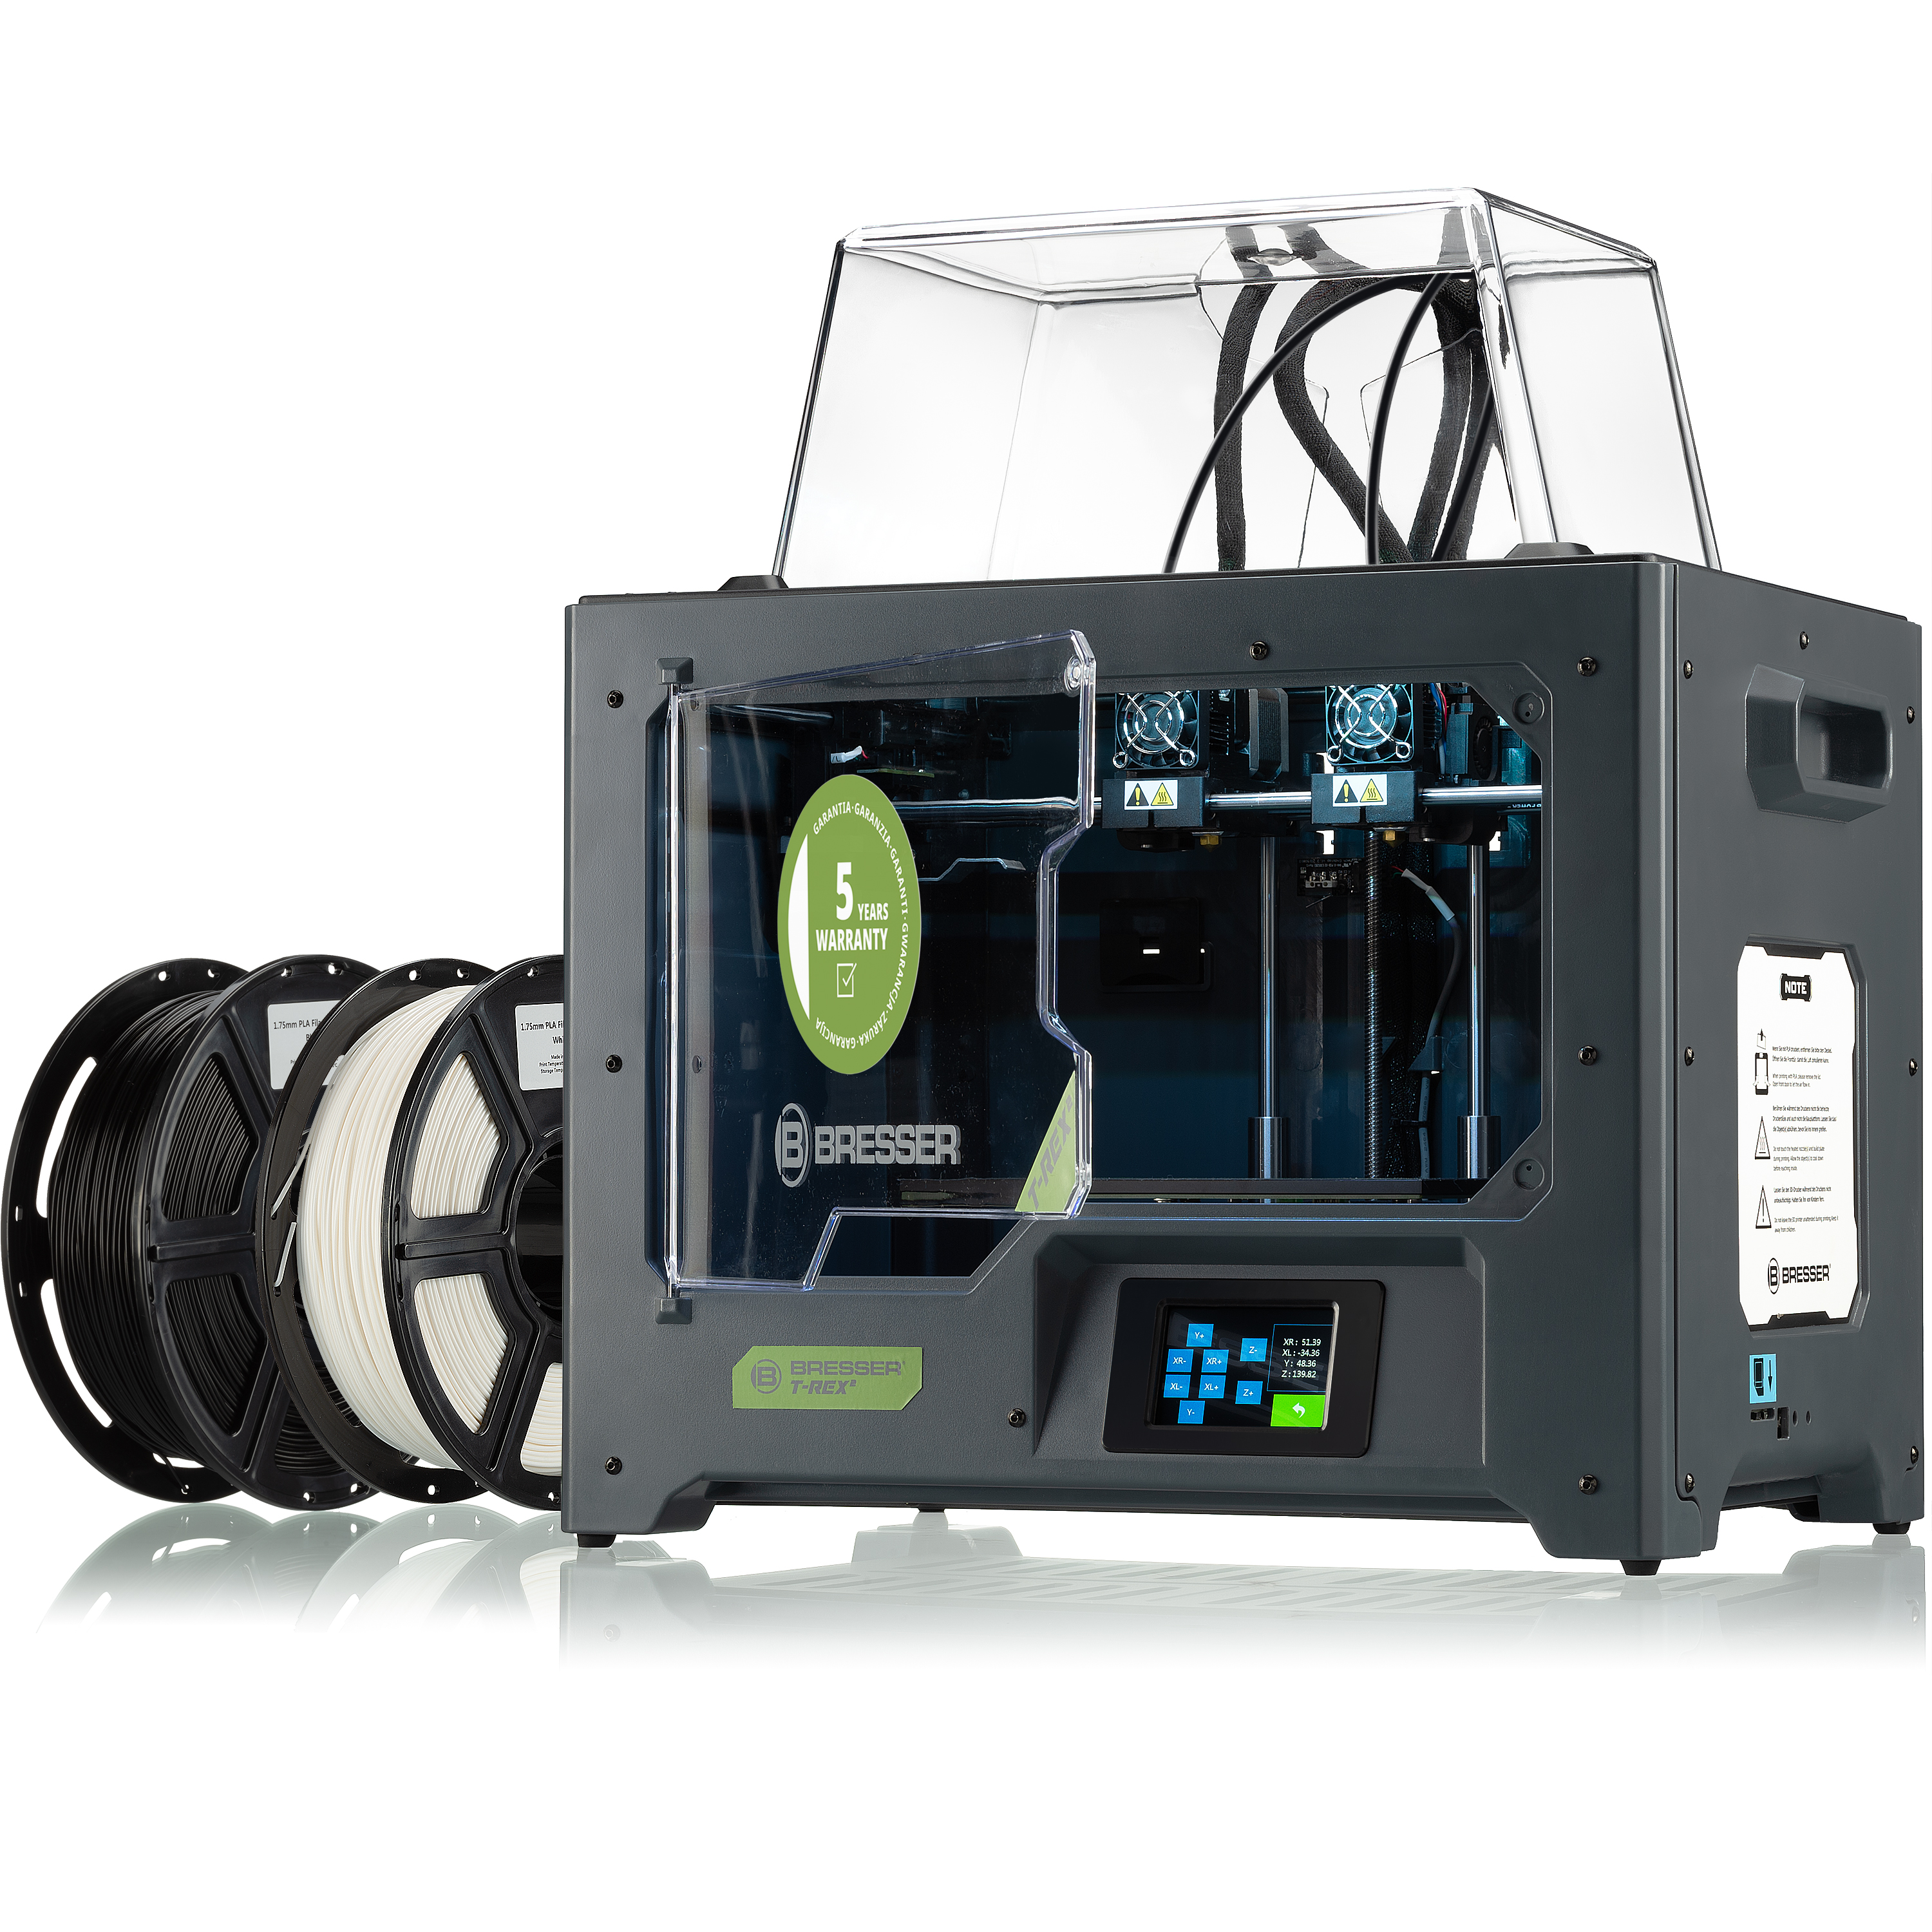 Impresora 3D BRESSER T-REX² con 2 extrusores